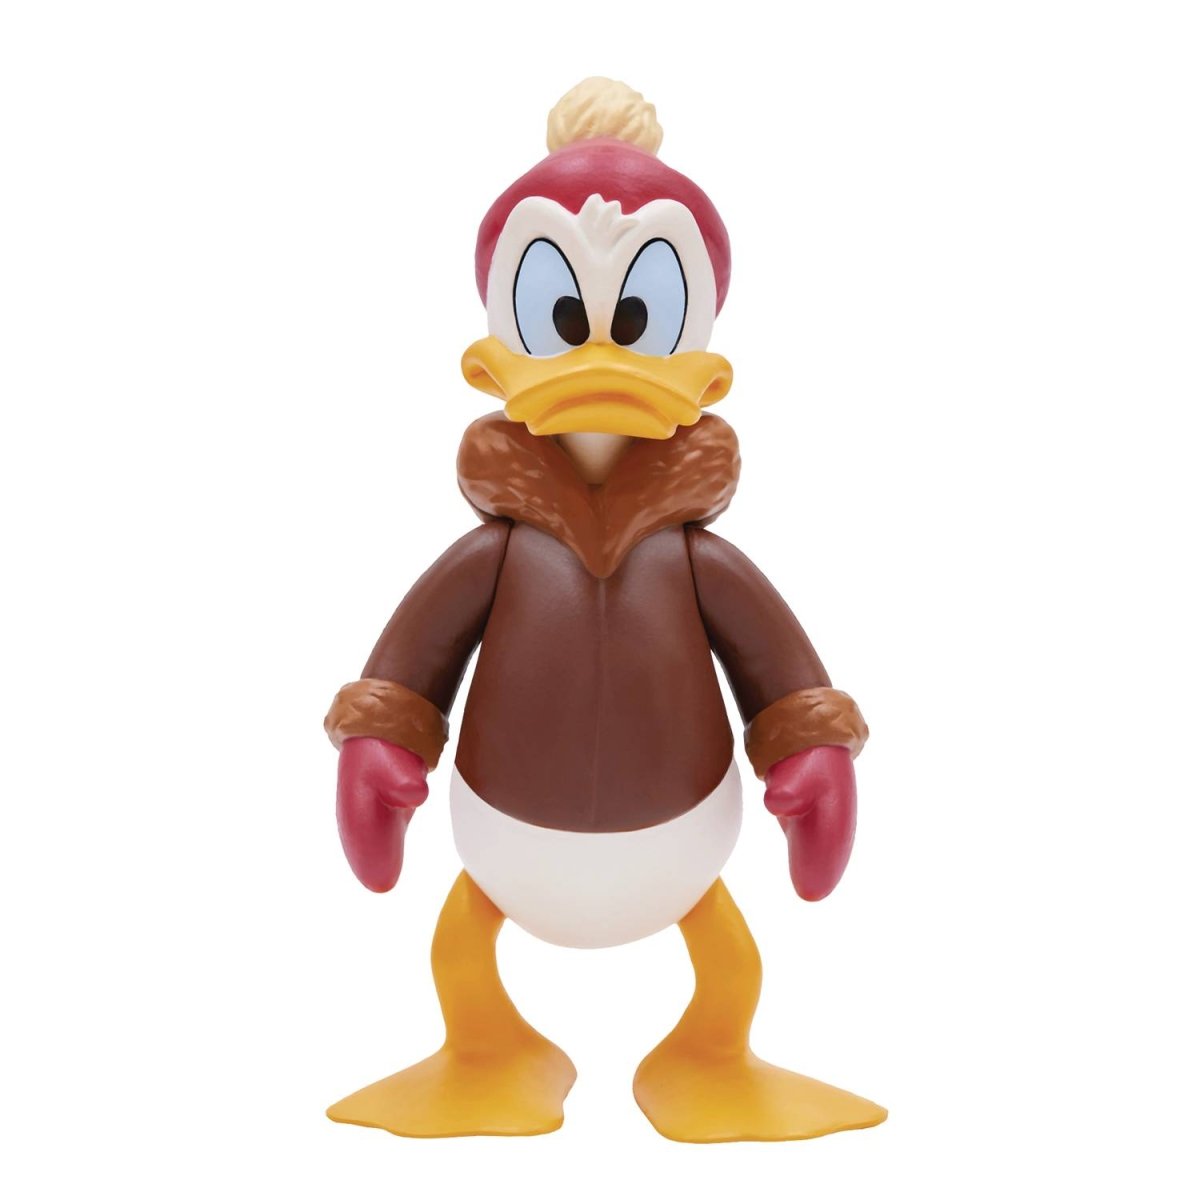 Disney Vintage Collection Wave 1 Donald Duck Figure (Crushed Packaging) - Walt's Comic Shop